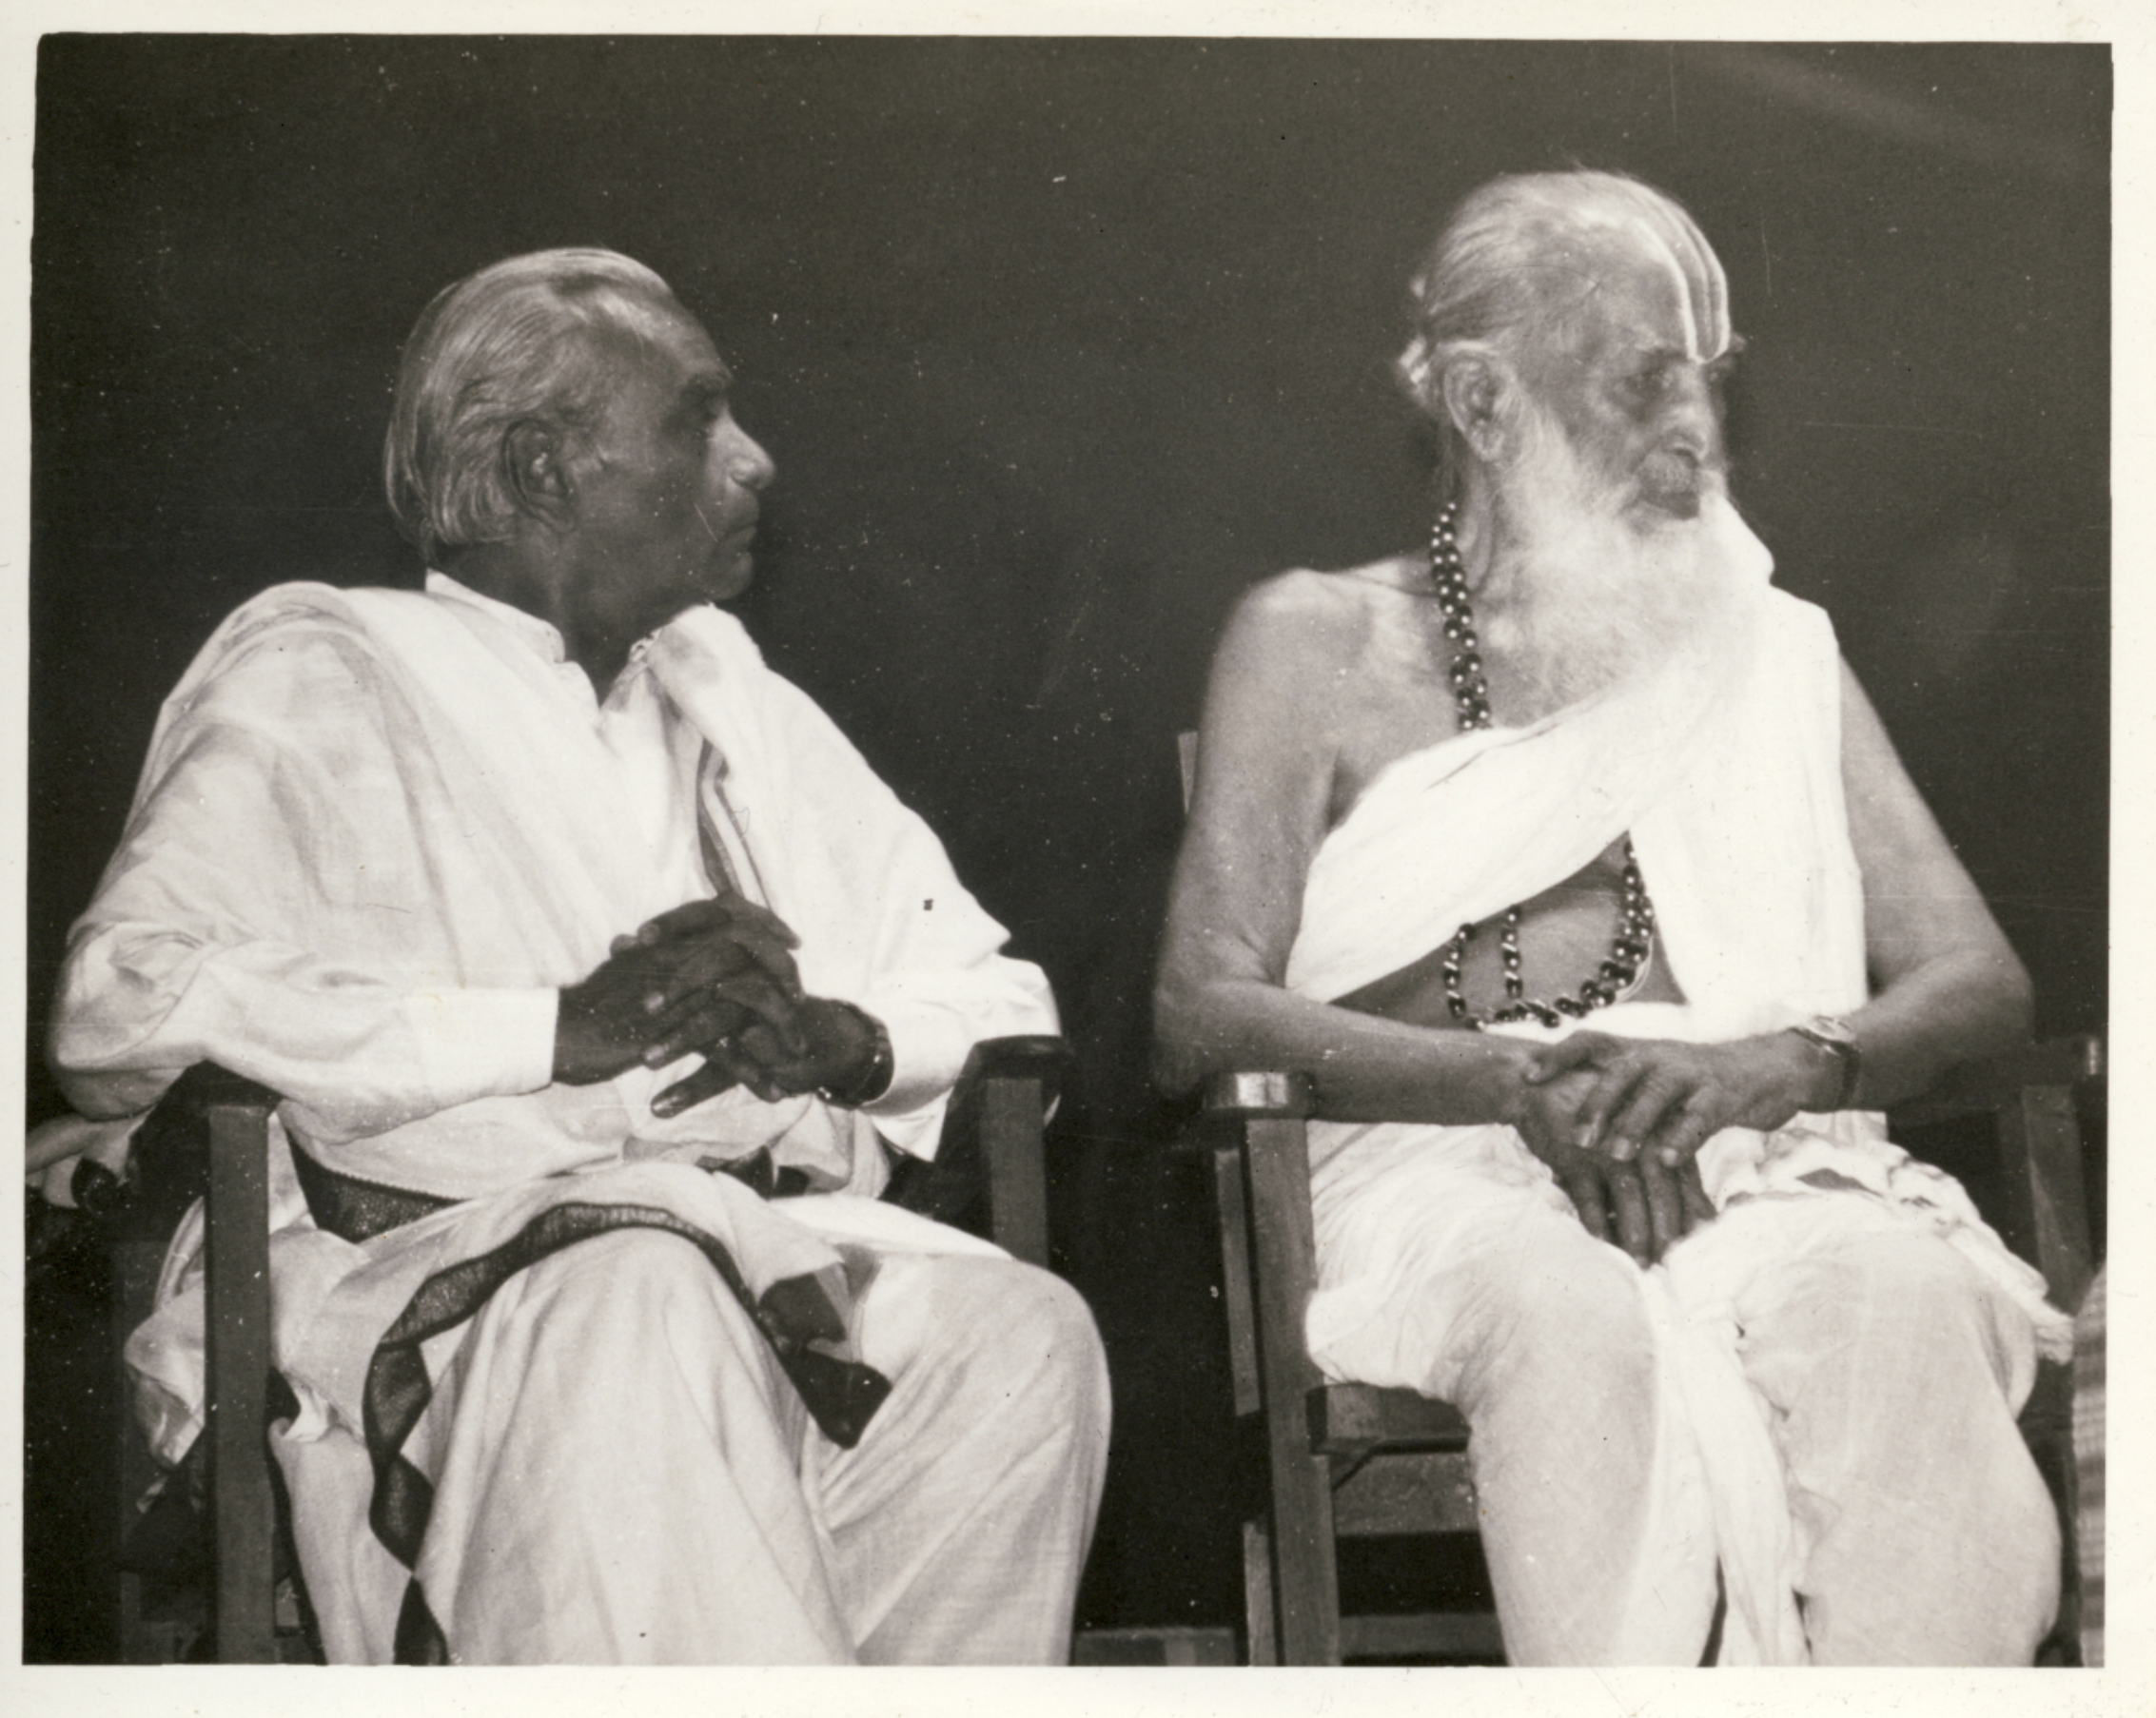  T Krishnamacharya and BKS Iyengar sitting together